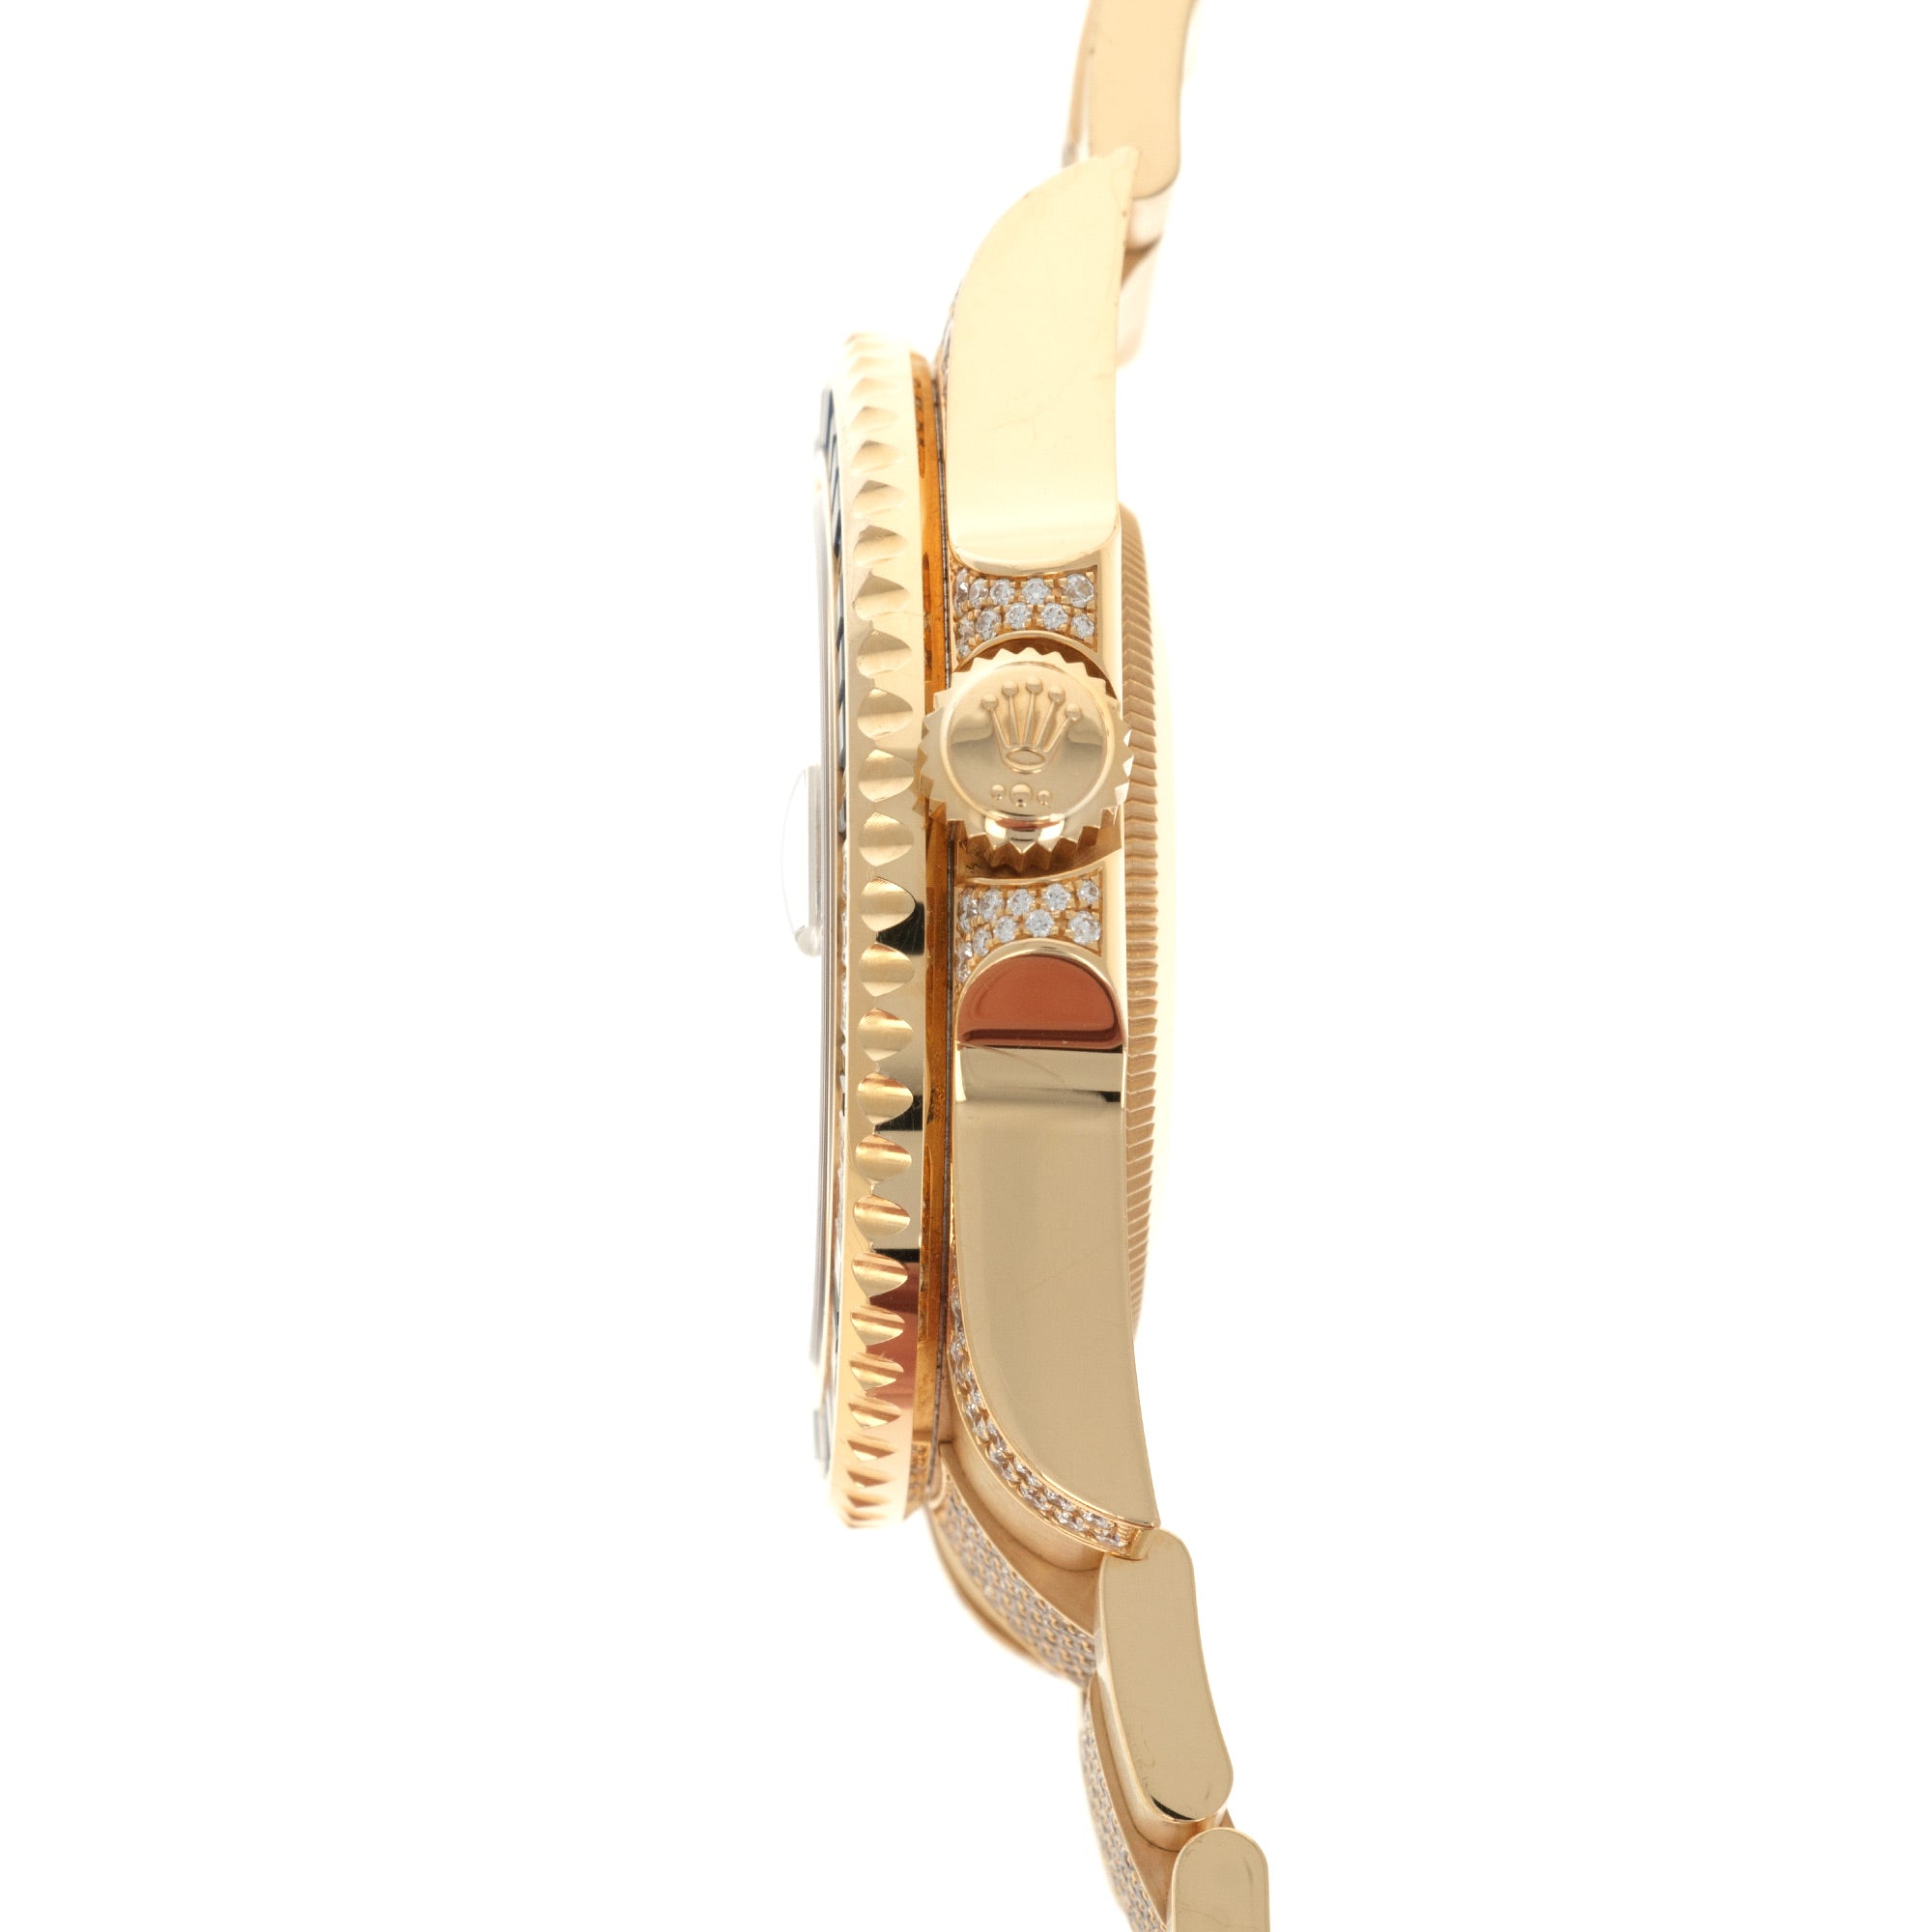 Rolex - Rolex Yellow Gold GMT-Master II Diamond Sapphire Watch Ref. 116758 - The Keystone Watches